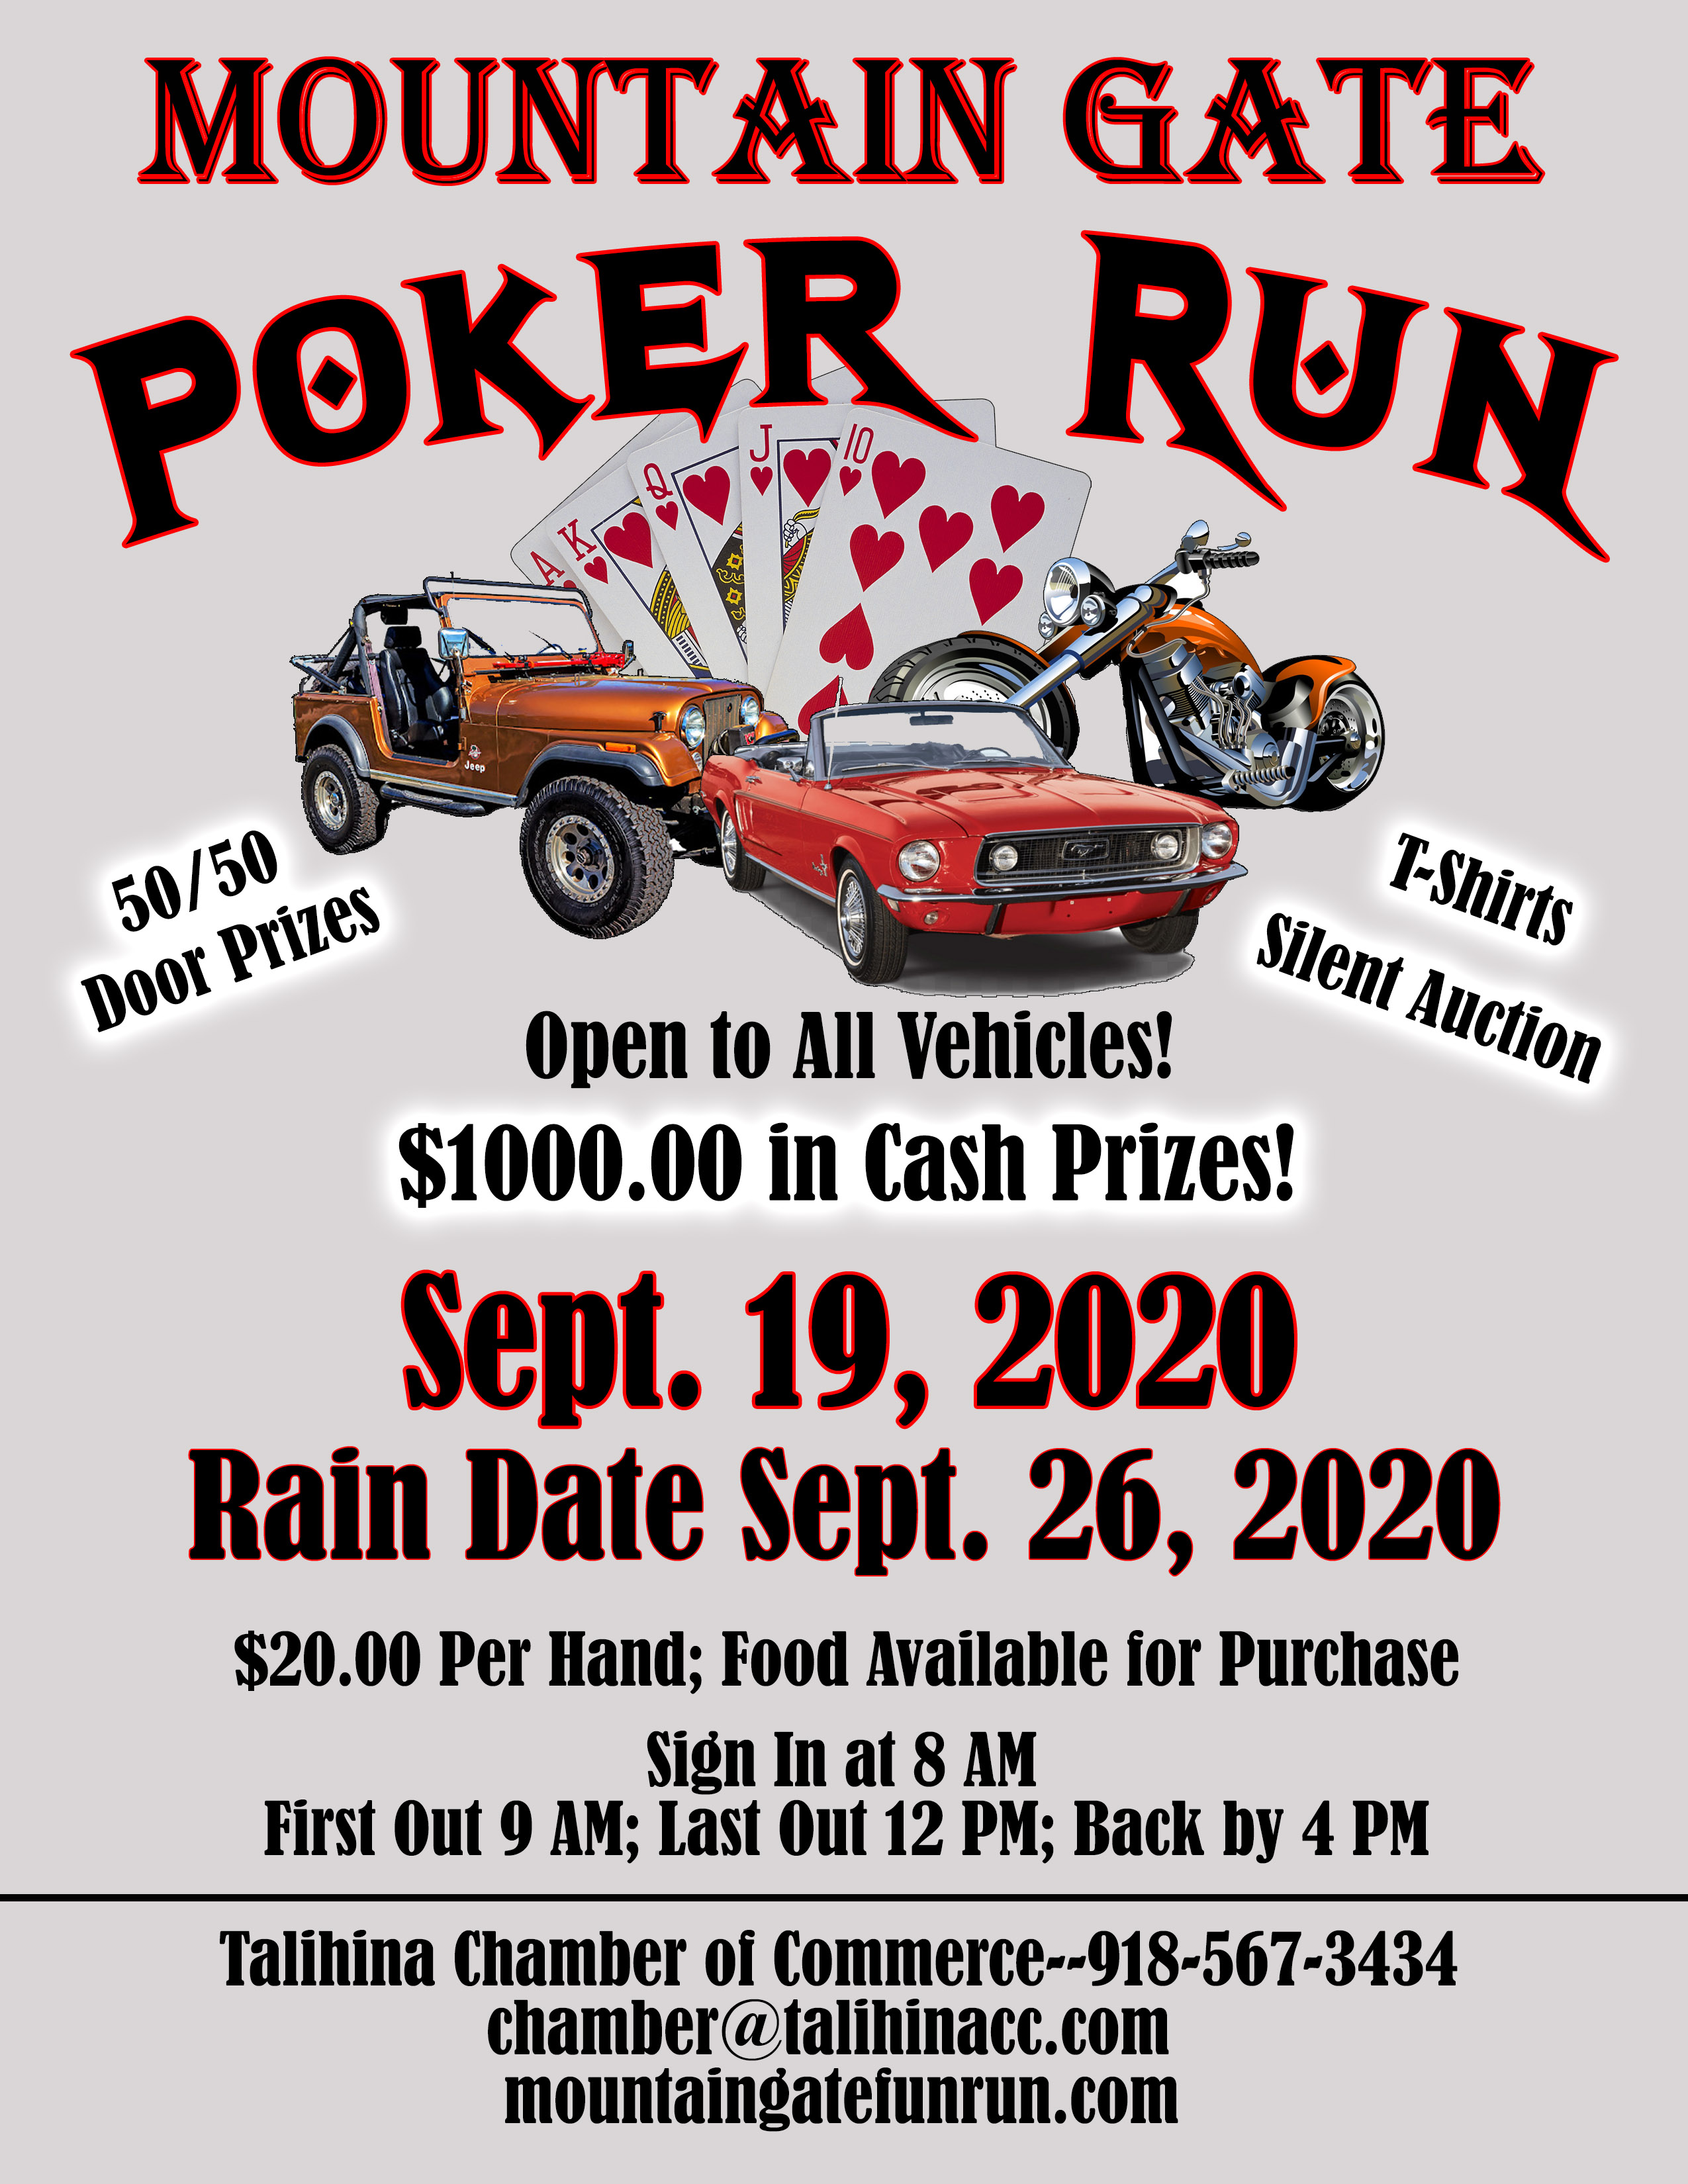 Poker runs in oklahoma this weekend 2020